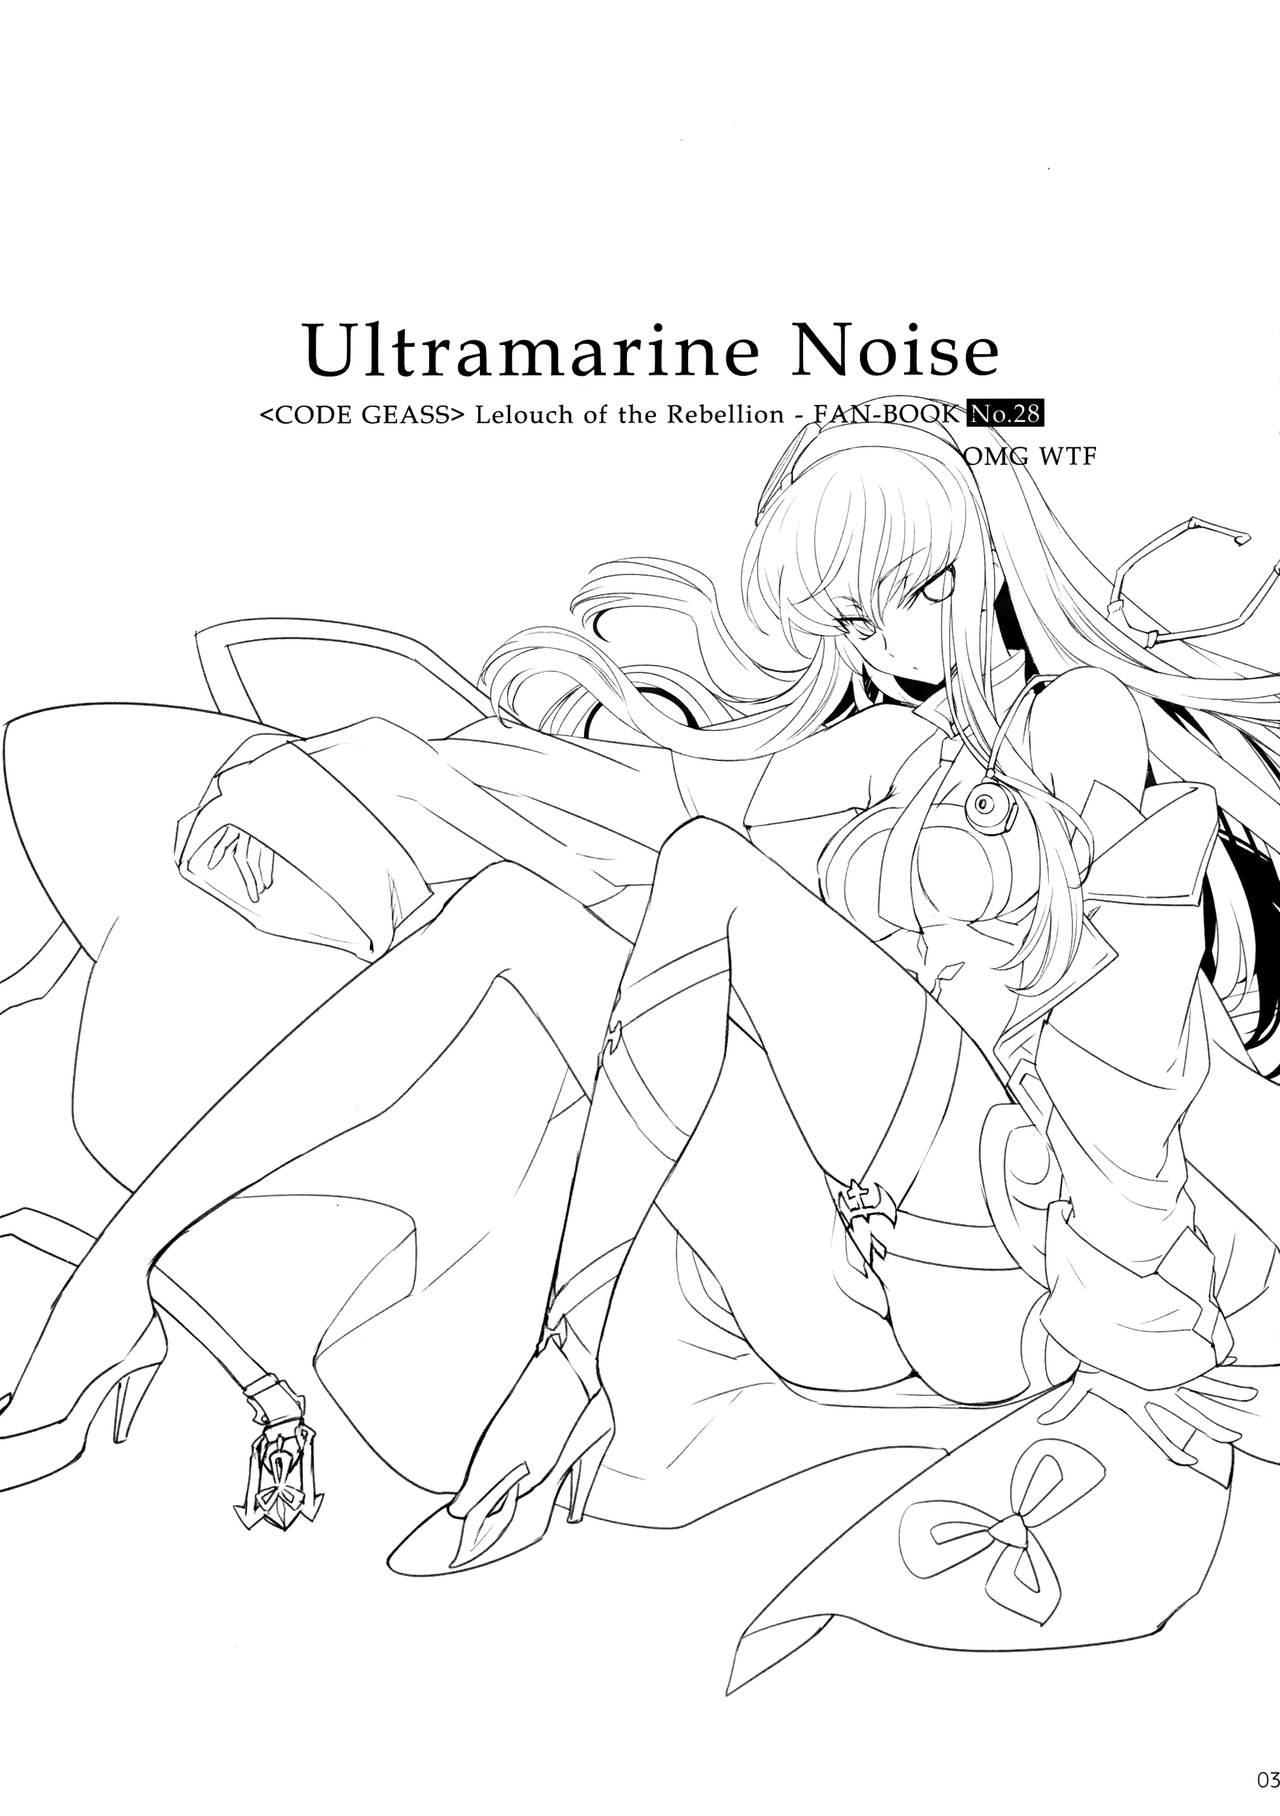 Ultramarine Noise 2